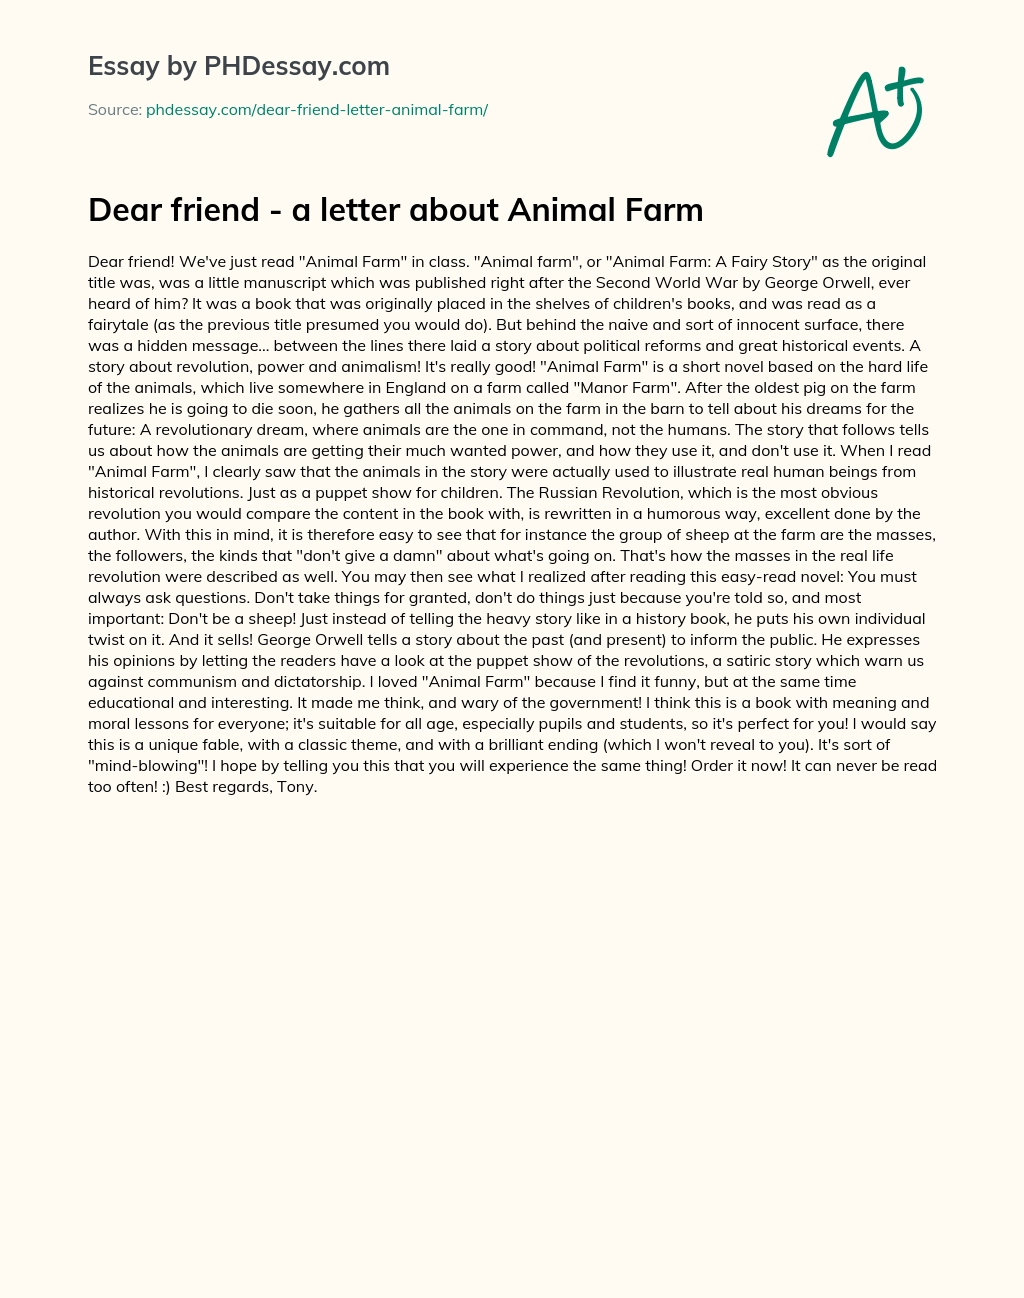 Dear friend – a letter about Animal Farm essay